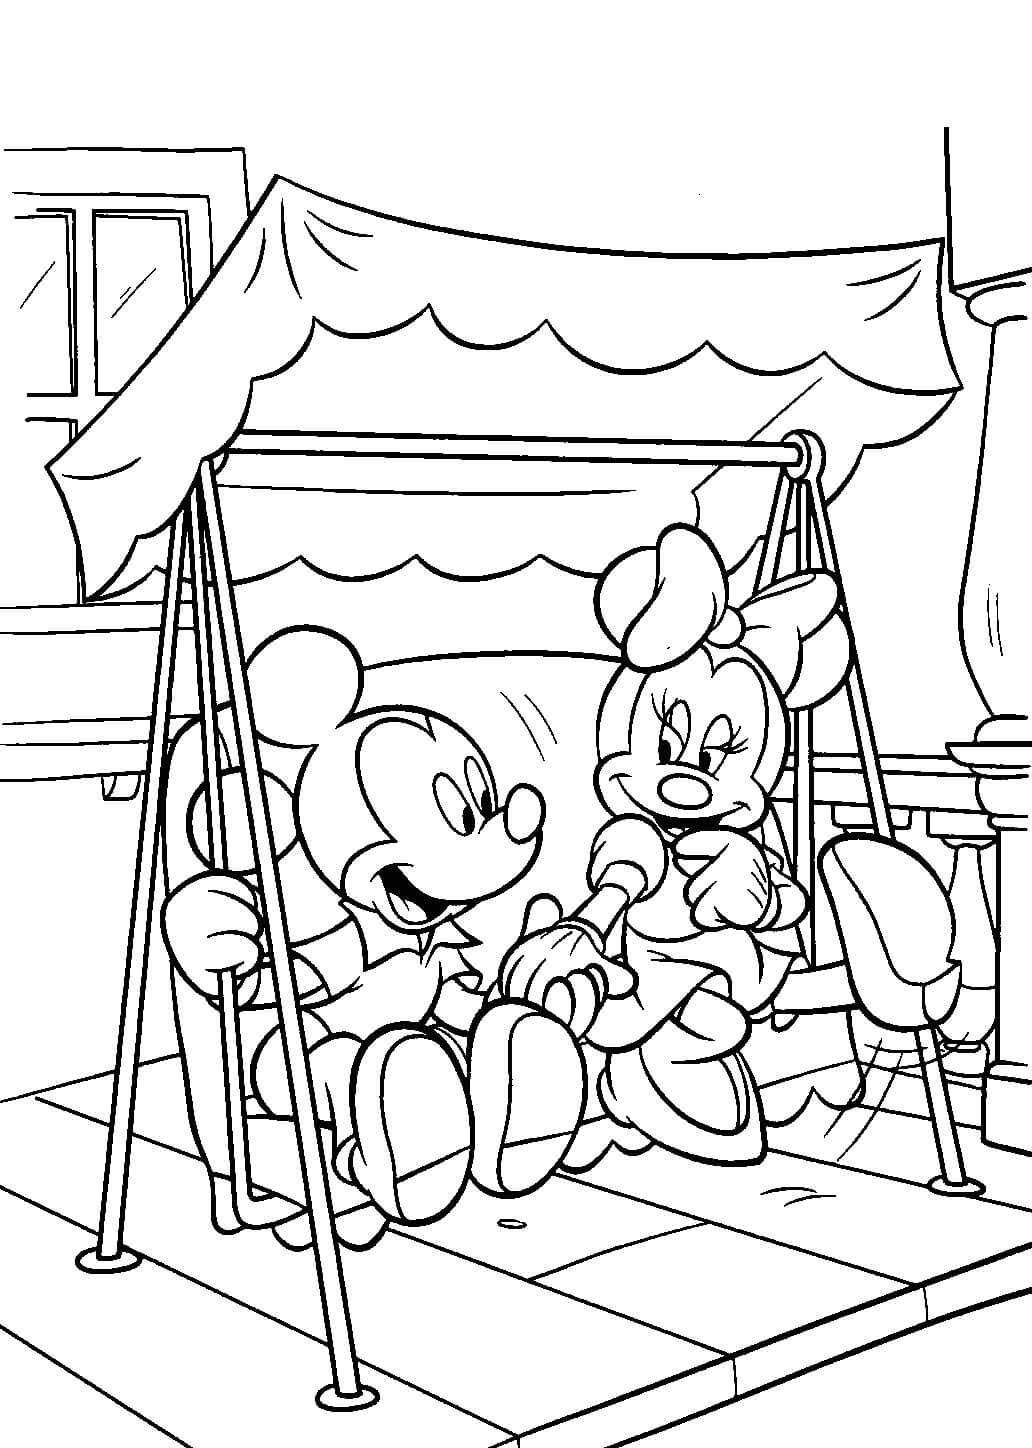 Mickey en Minnie Mouse spelen op de schommels